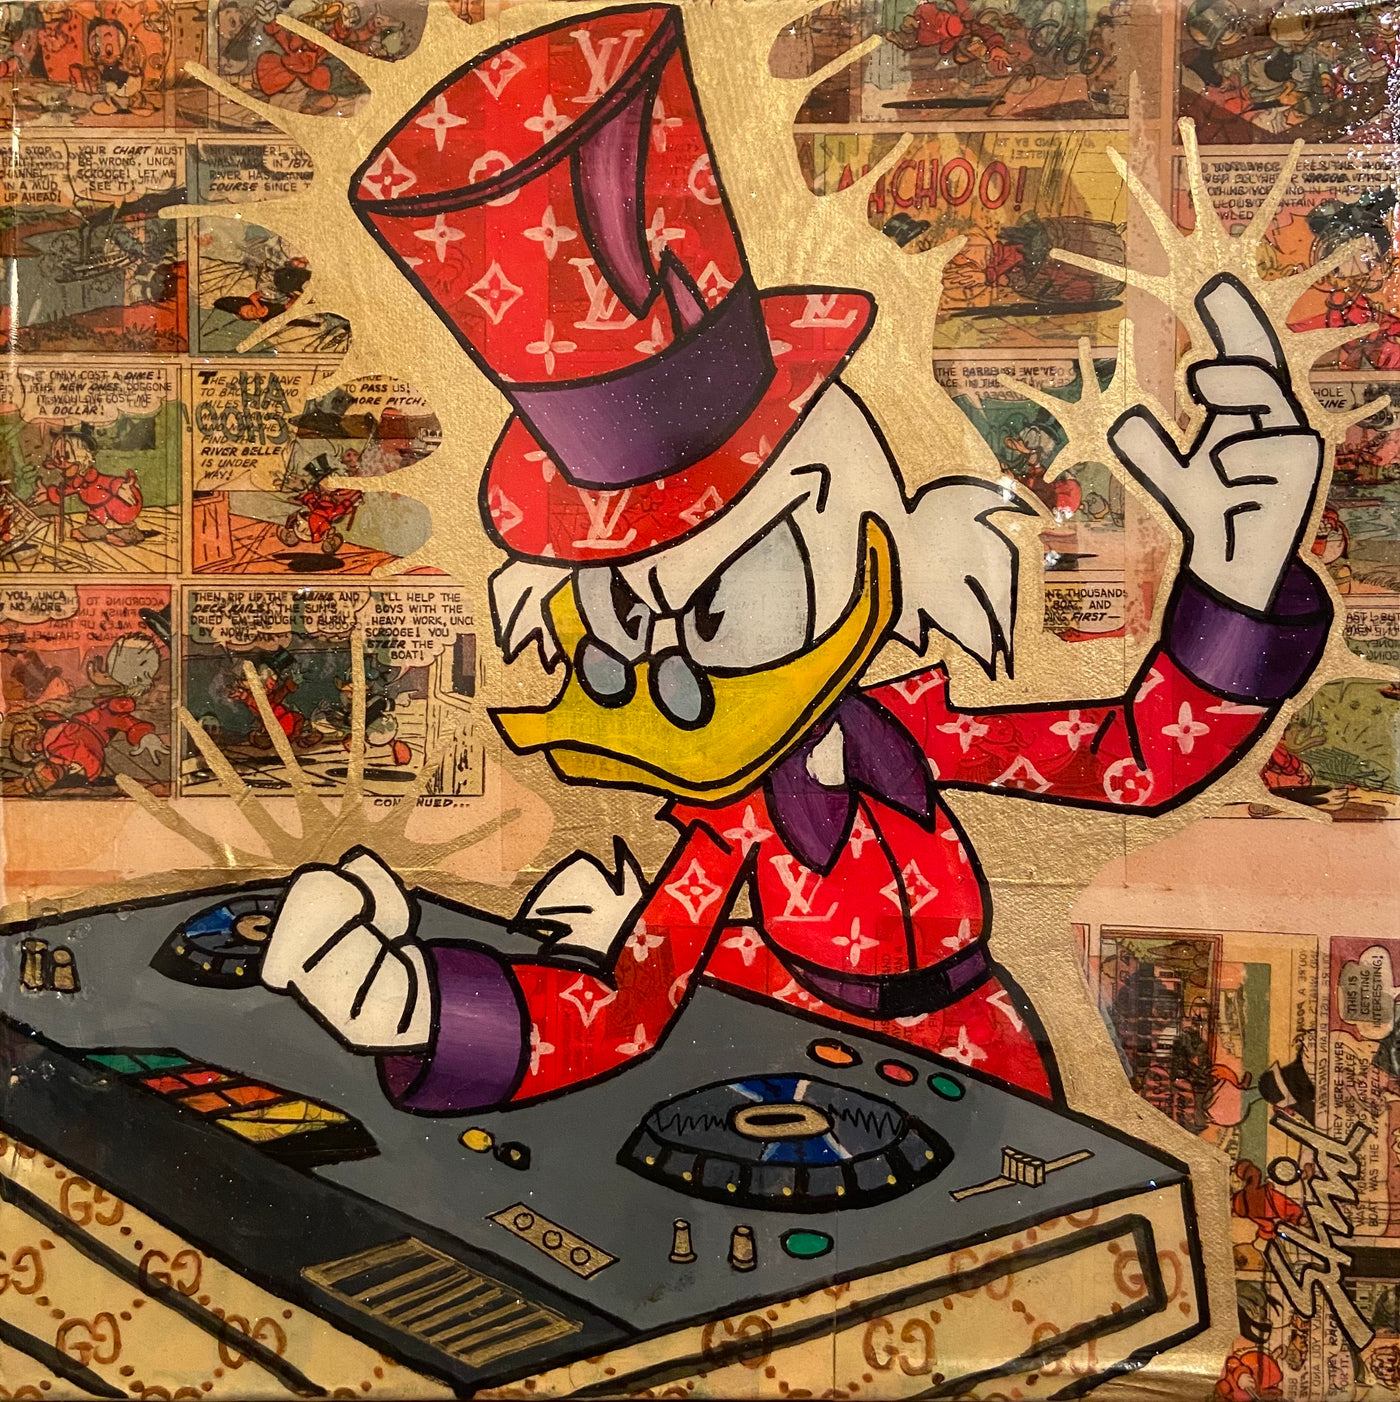 DJ Scrooge